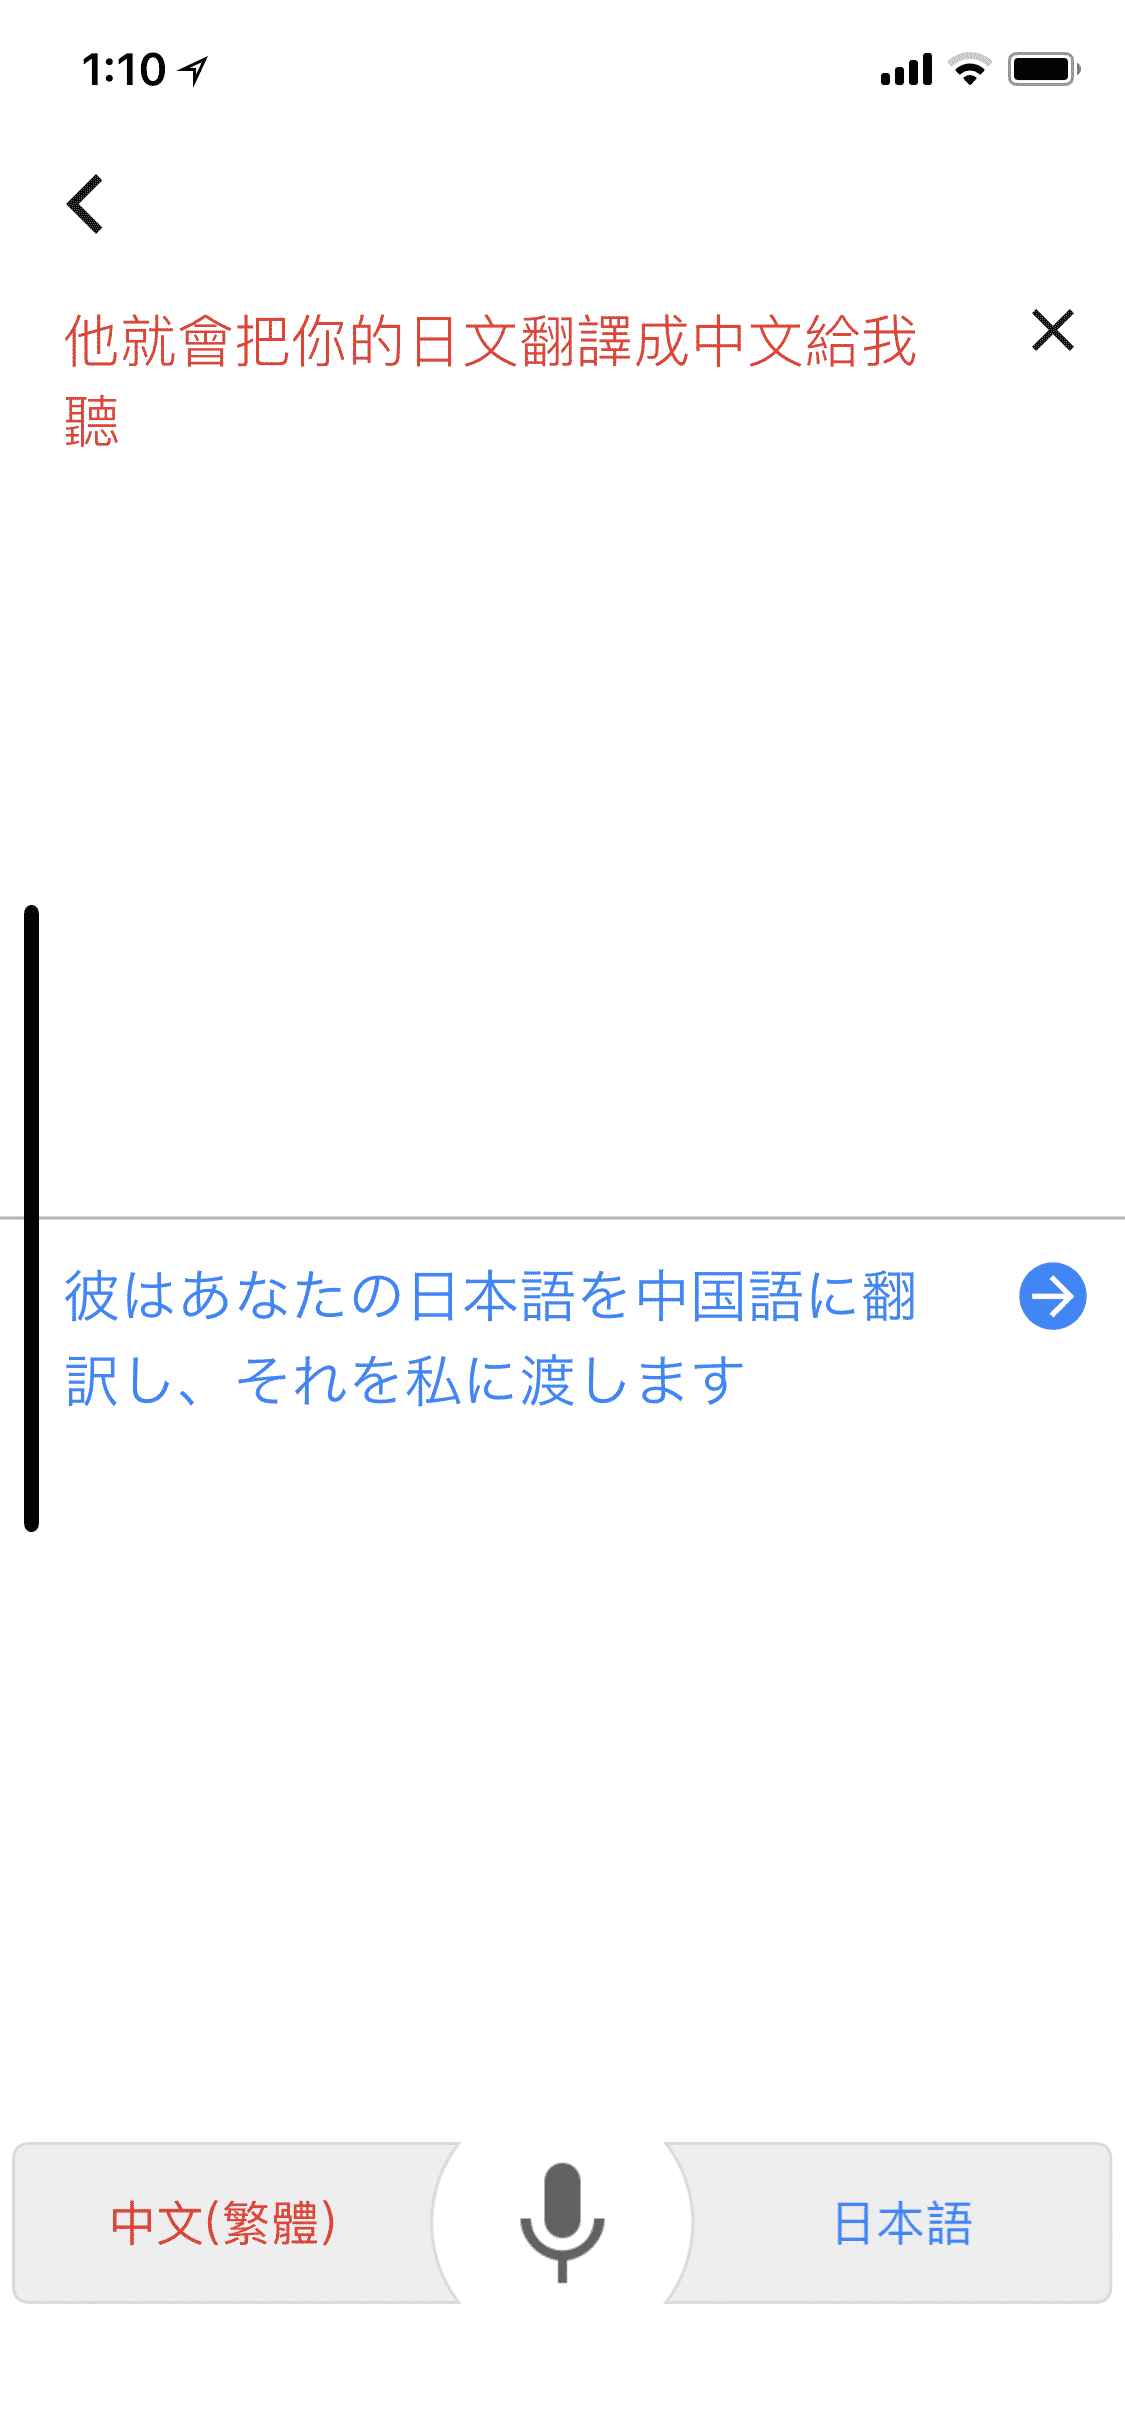 Translator-iOS-Jap09_almost